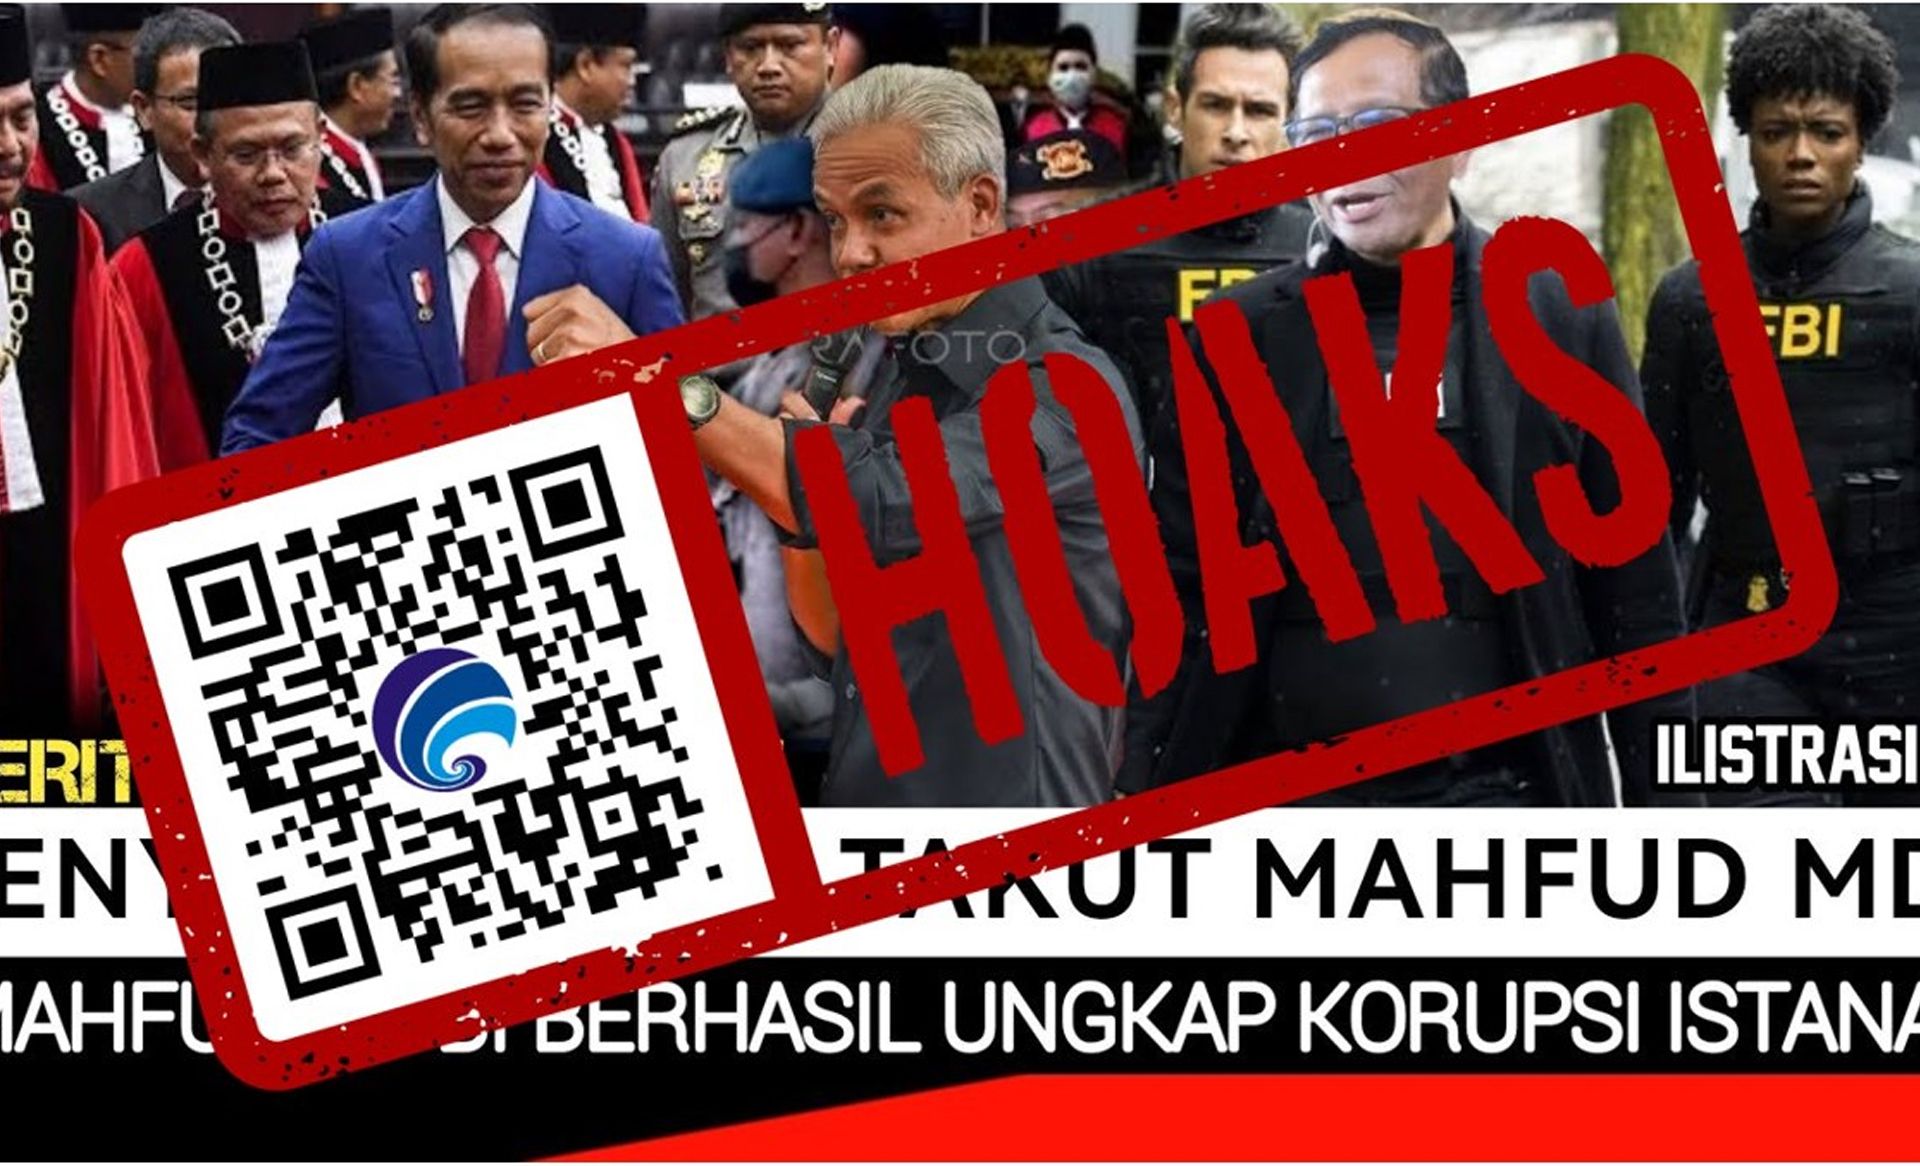 Hoaks Mahfud MD dan FBI Berhasil Ungkap Korupsi di Istana Kepresidenan